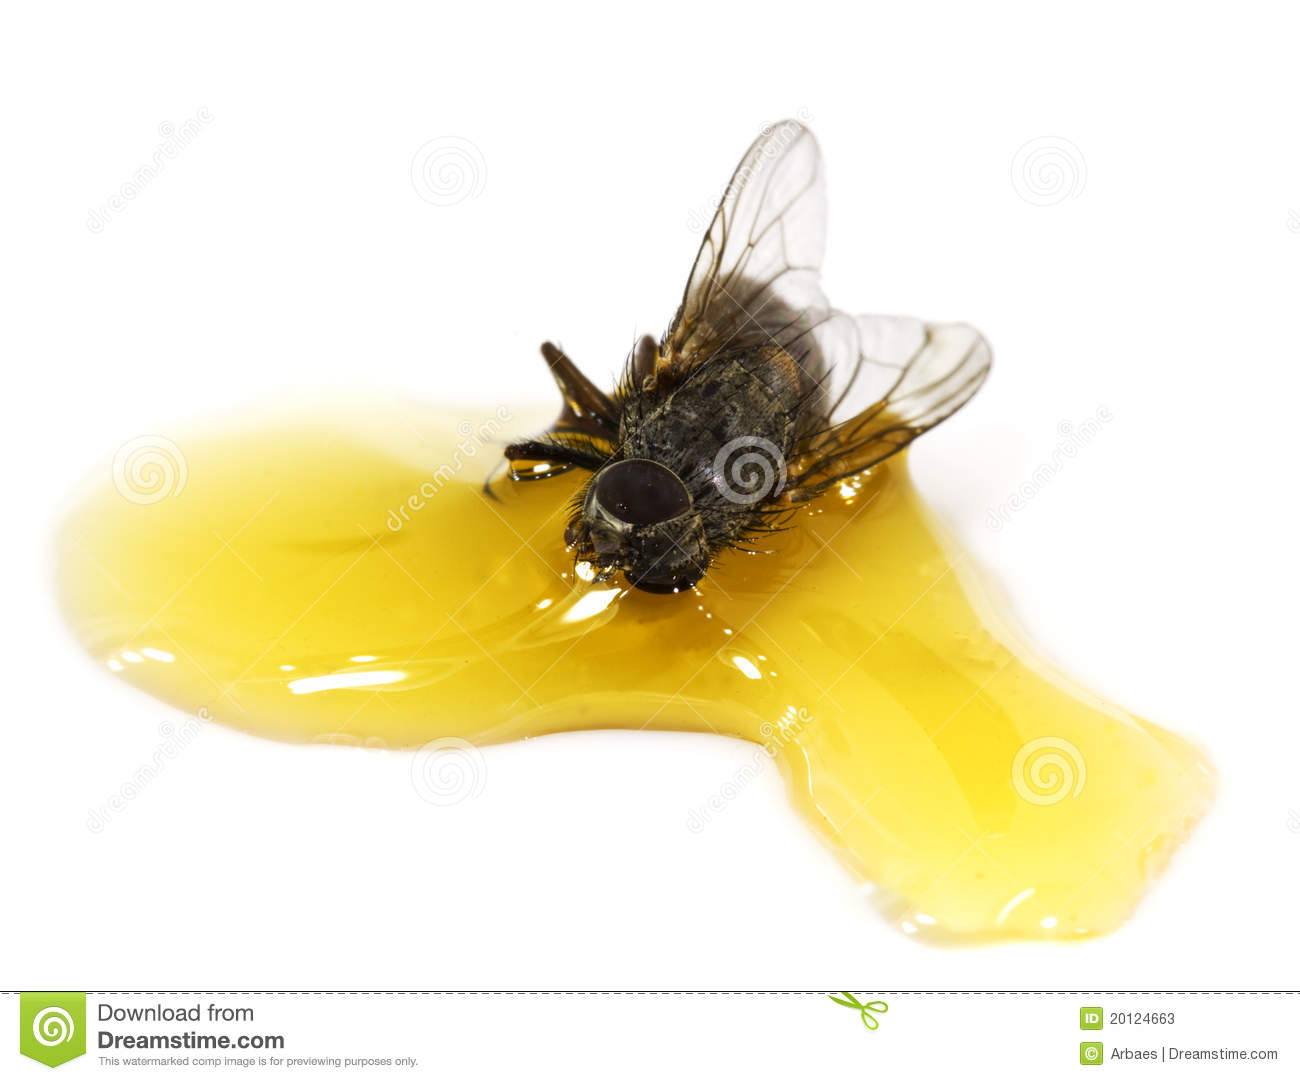 Мухи липнут. Муха на еде. Медовая Муха. Пчелы слетаются на мед. Мухи на мед слетаются.